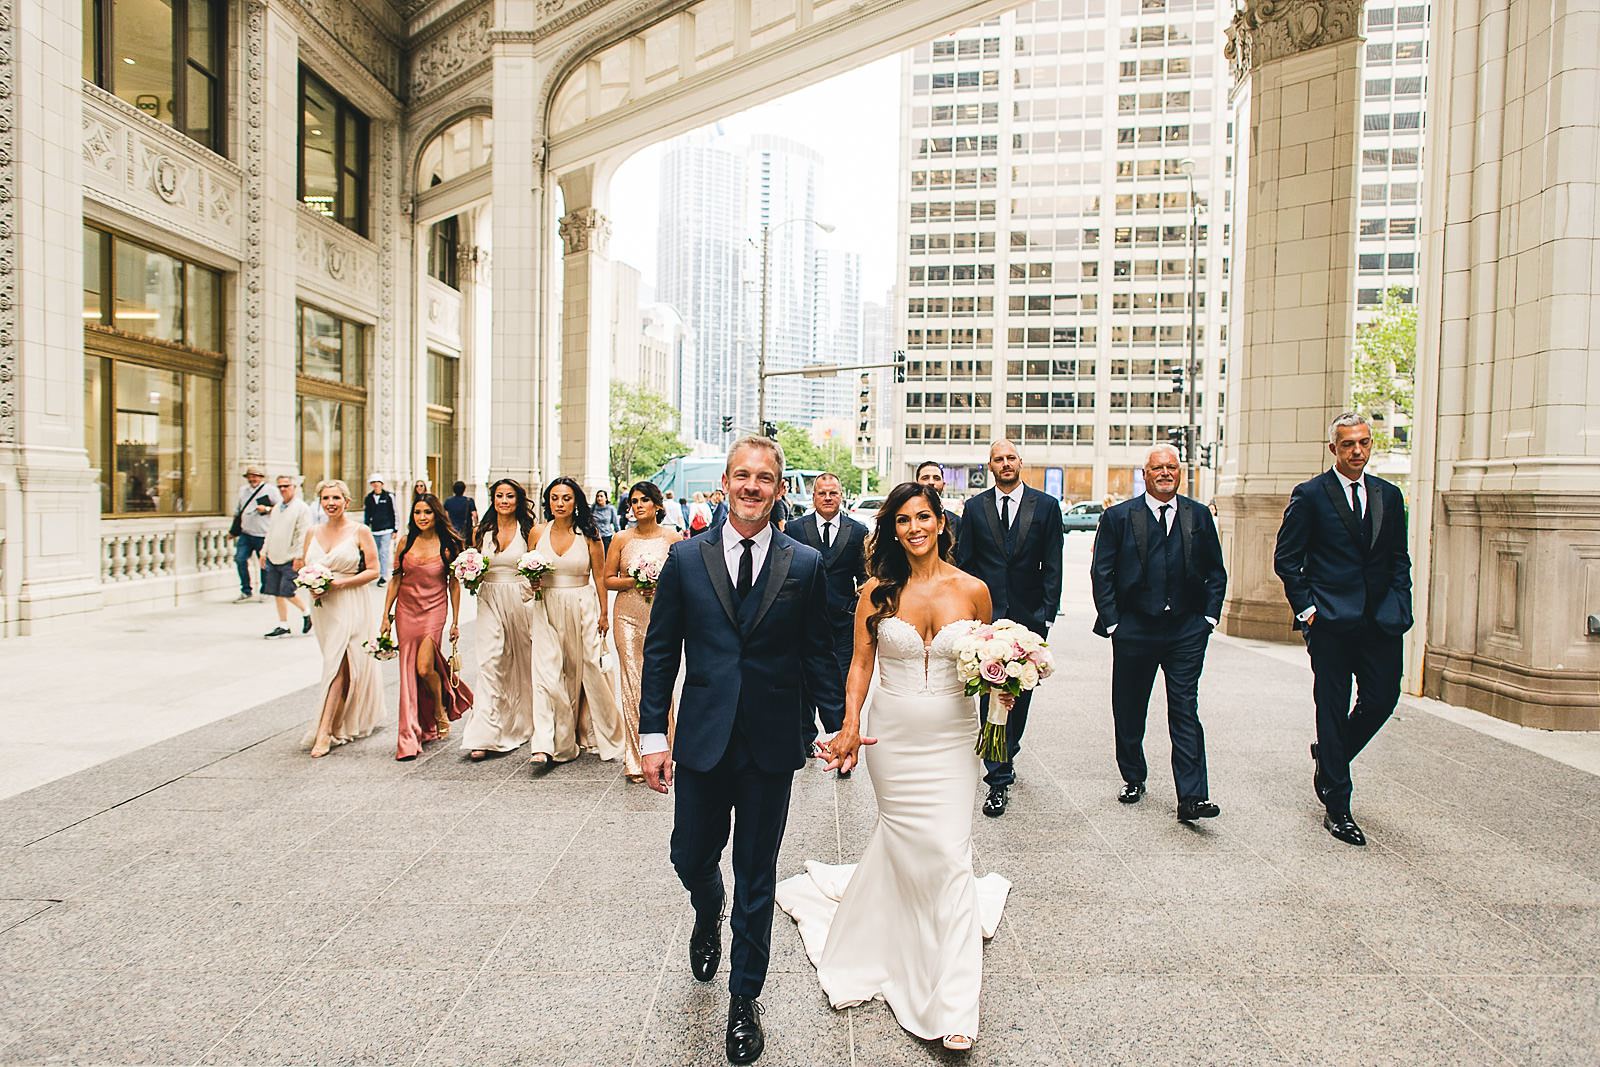 21 bridal party photos - Intercontinental Chicago Hotel Wedding // Lili + Danny